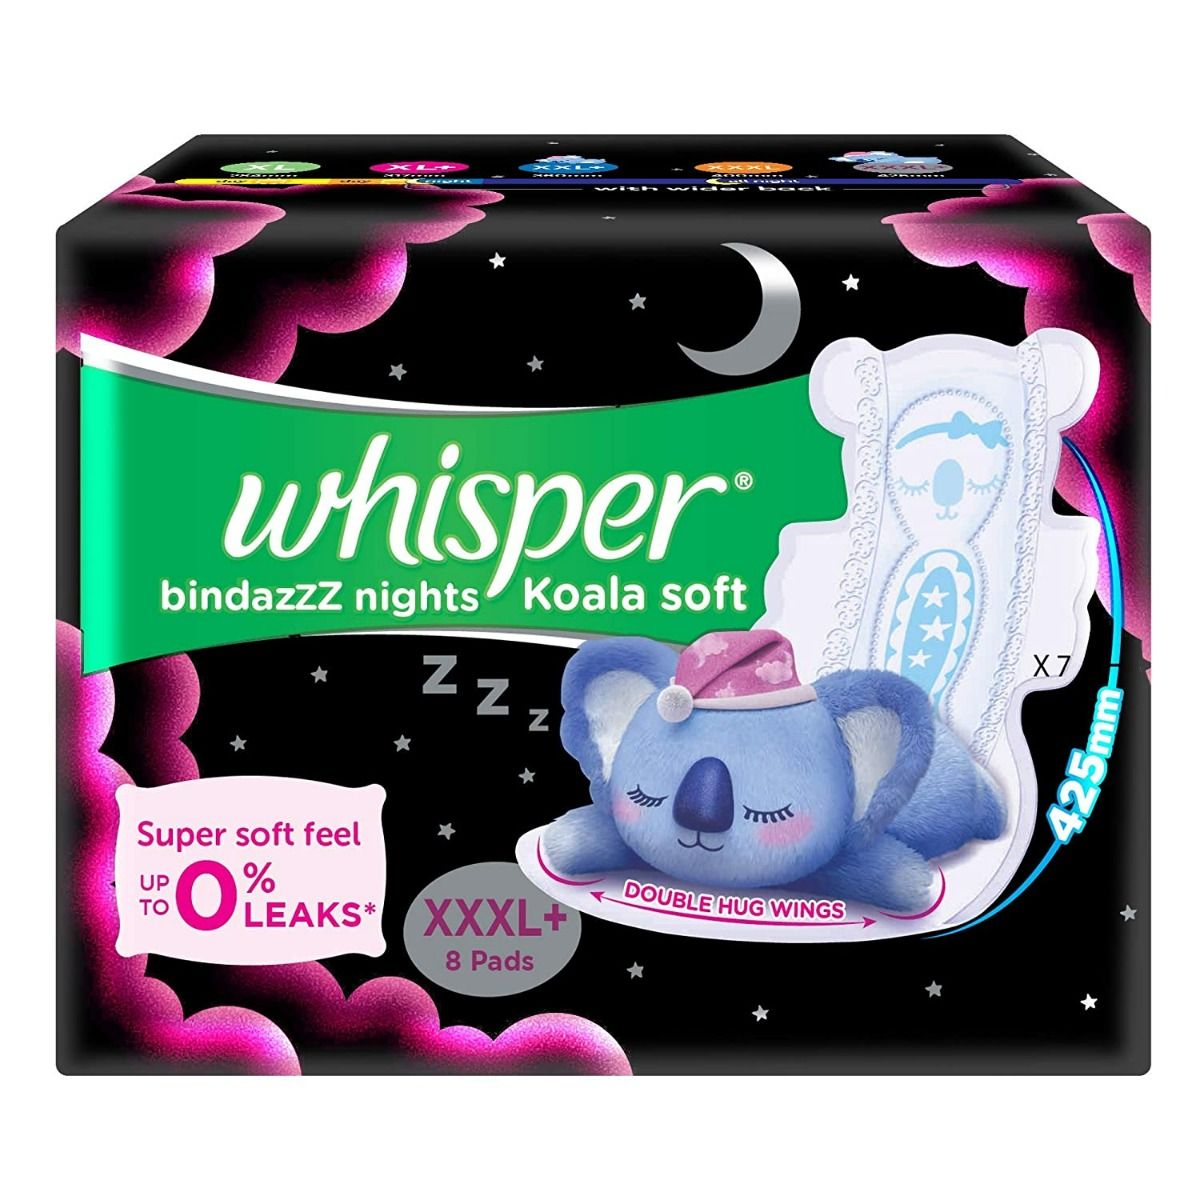 Buy Whisper Bindazz Nights Koala Soft Sanitary Pads XXXL+, 8 Count Online